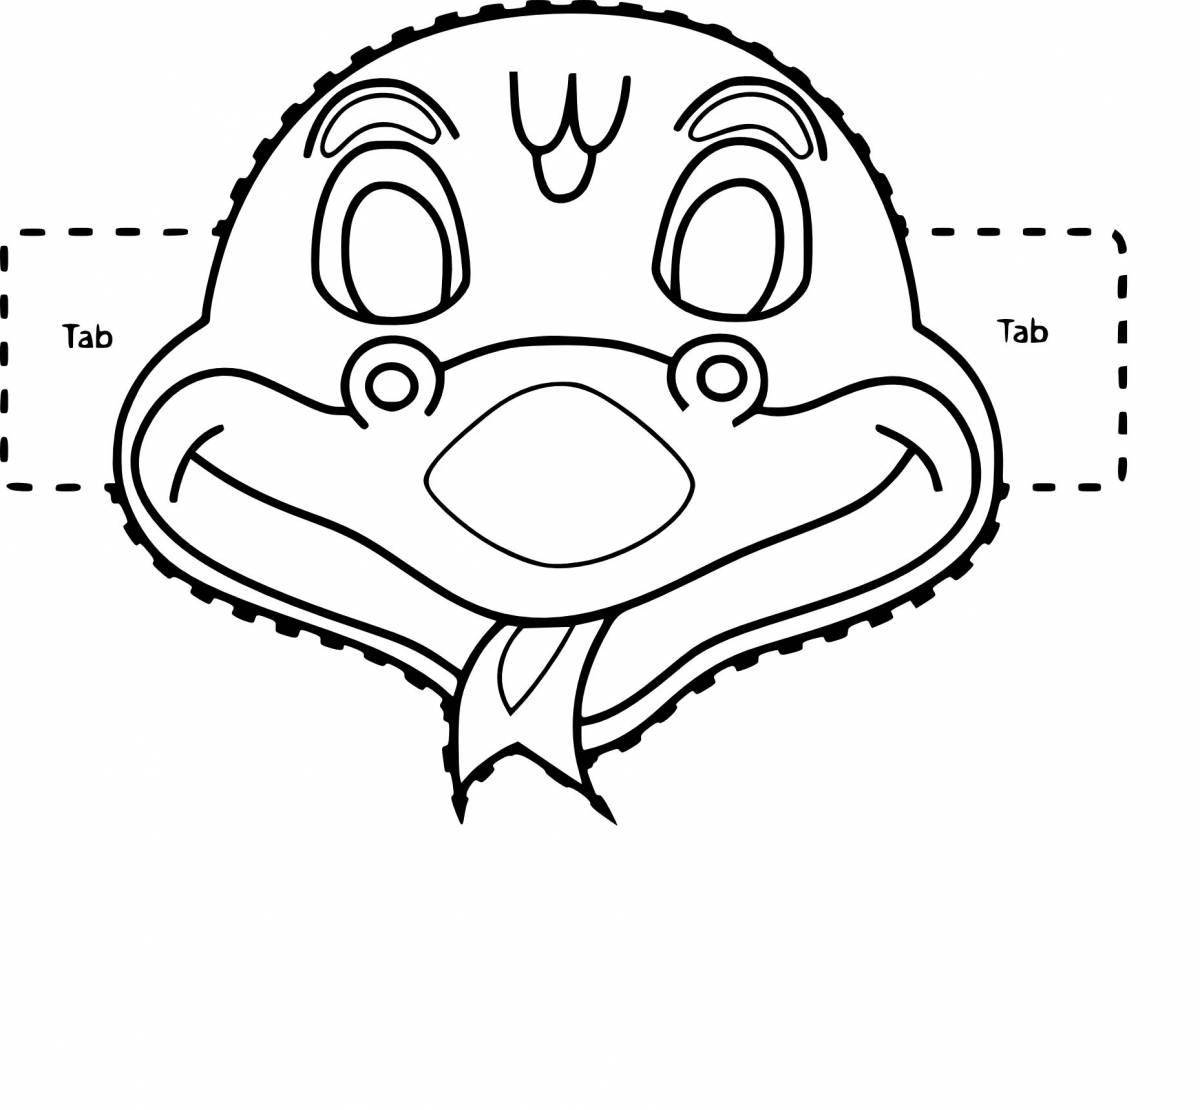 Sweet crocodile mask coloring page